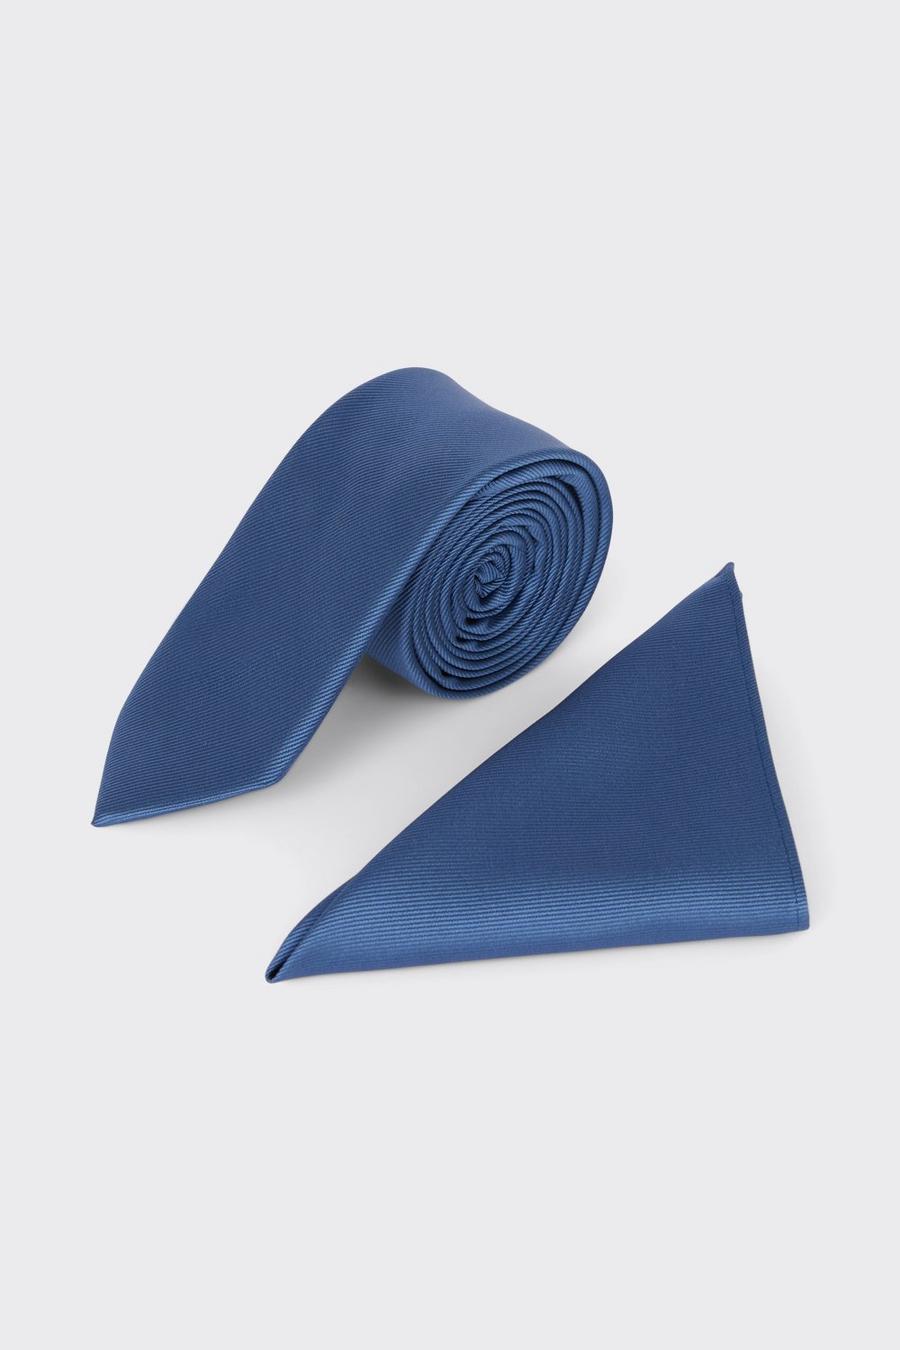 Slim Blue Tie And Pocket Square Set